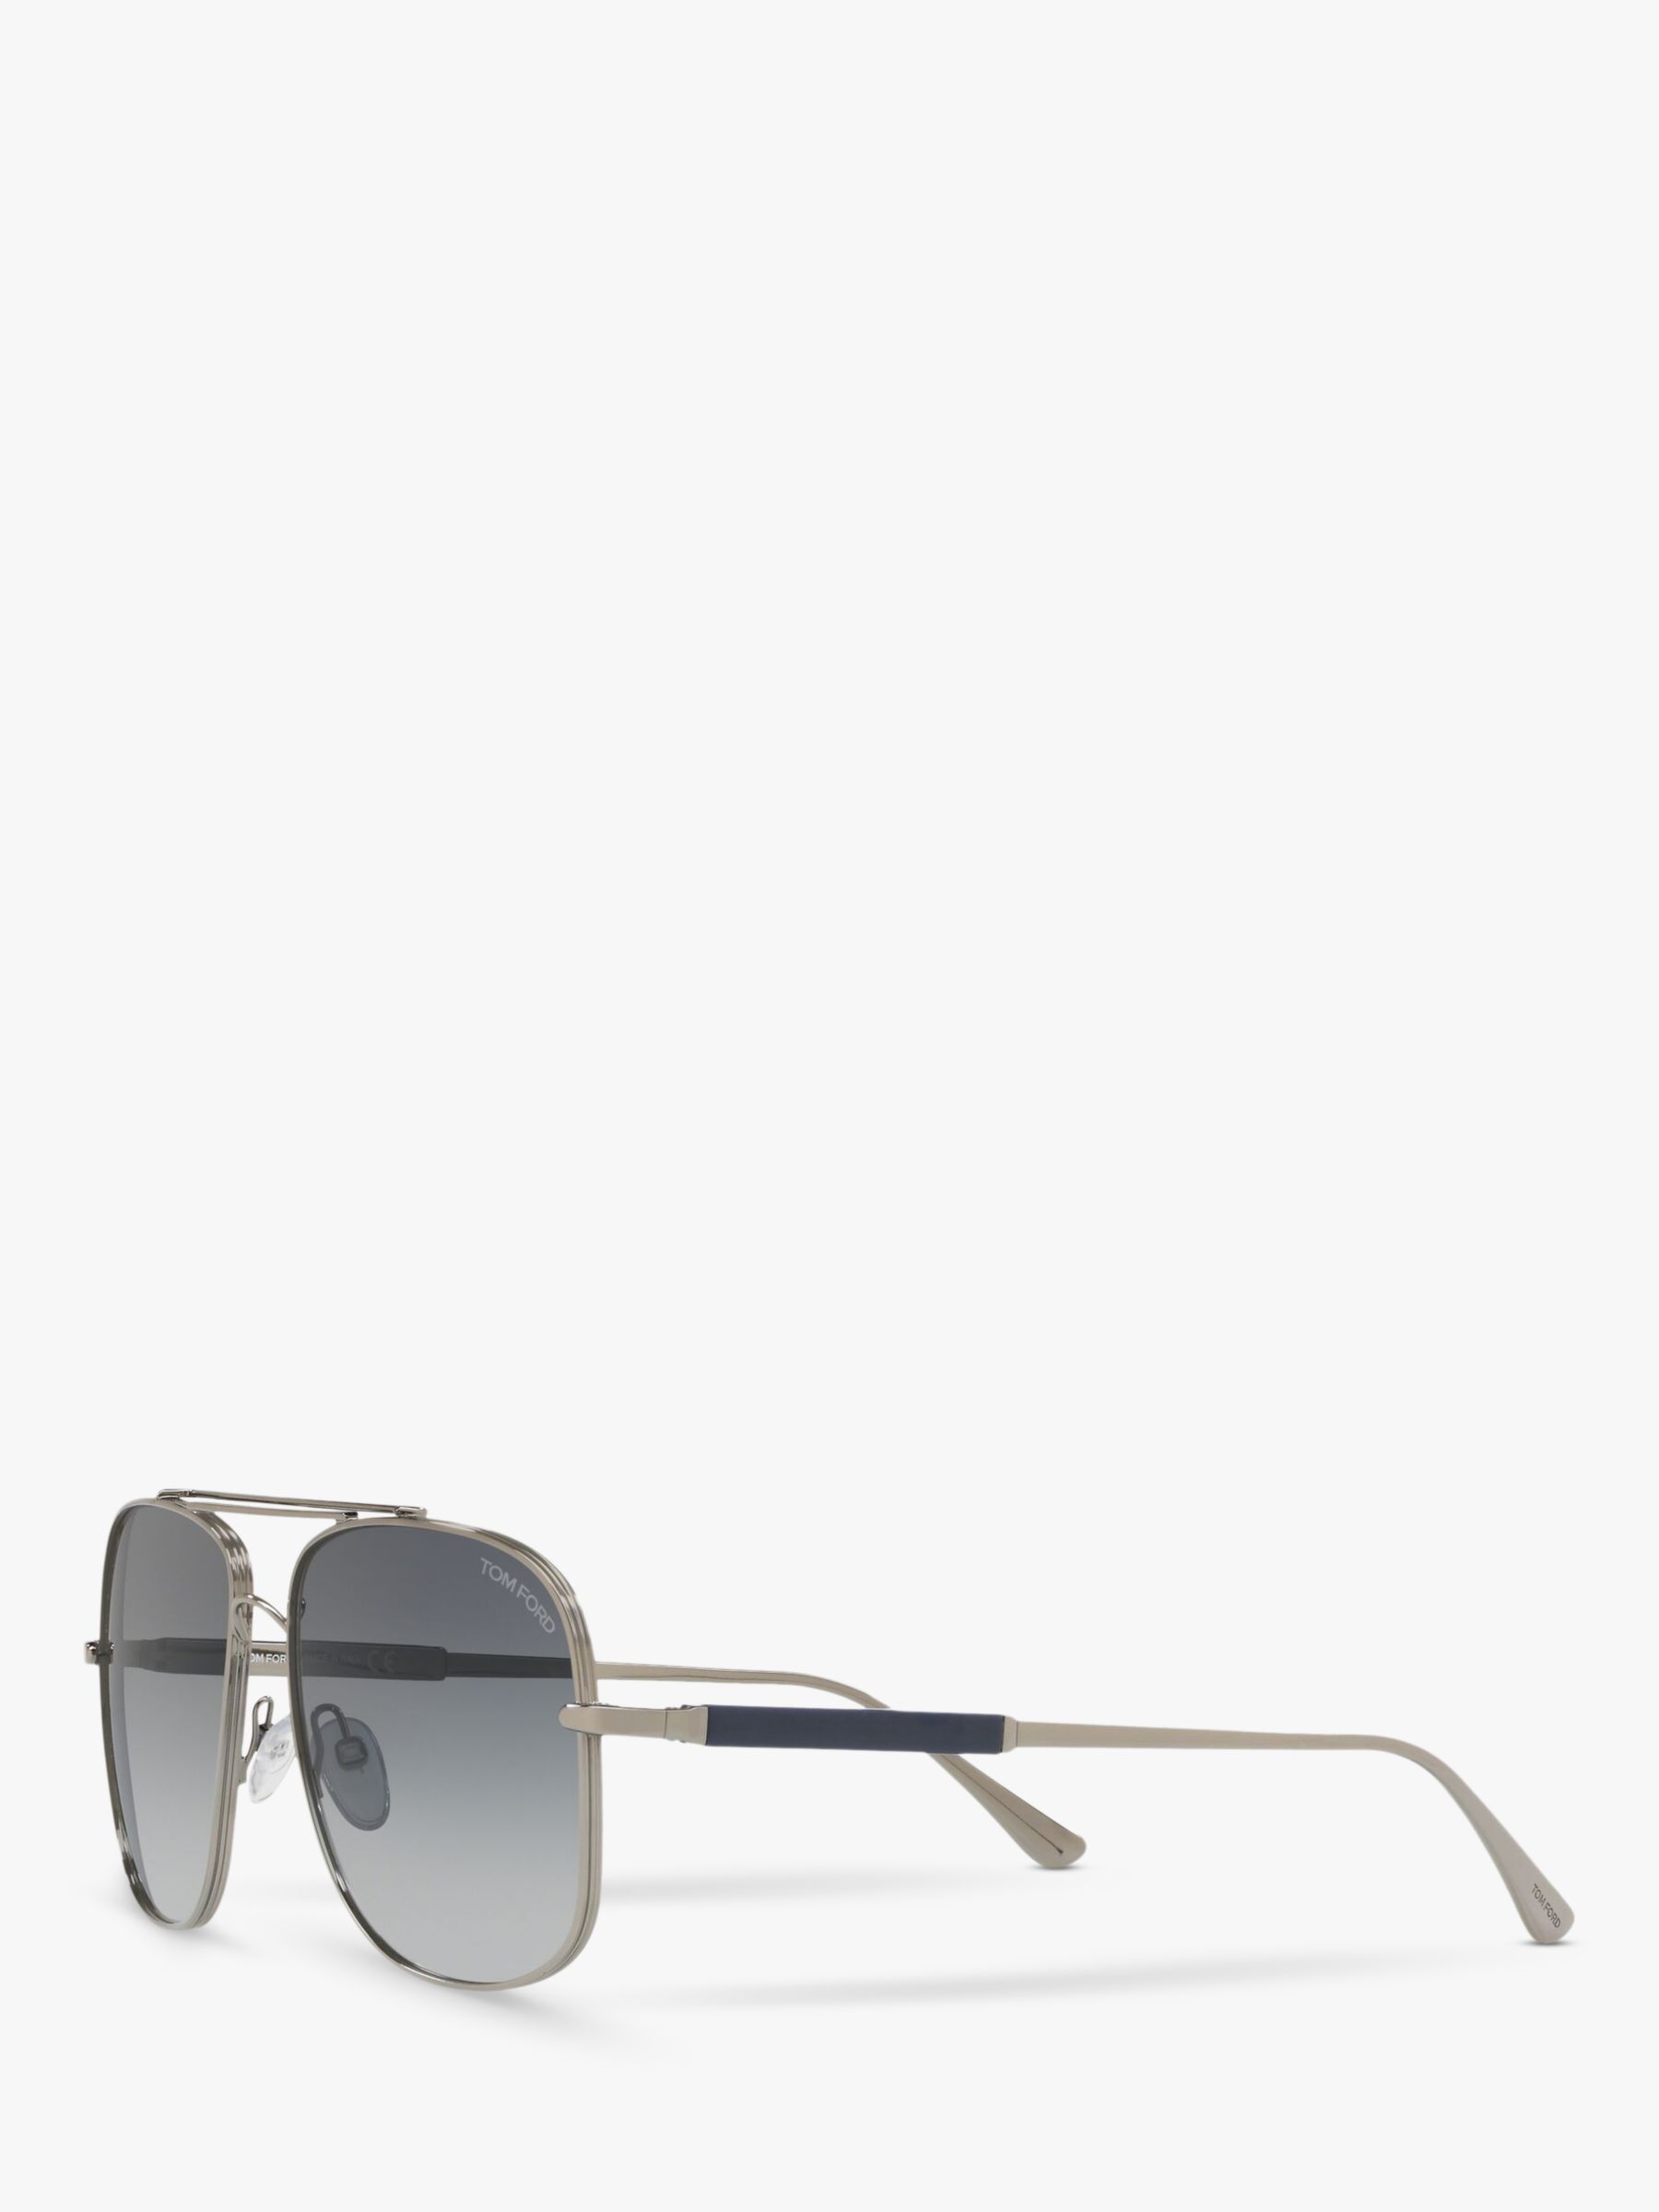 TOM FORD FT0669 Men's Square Sunglasses, Gunmetal/Blue Gradient at John  Lewis & Partners